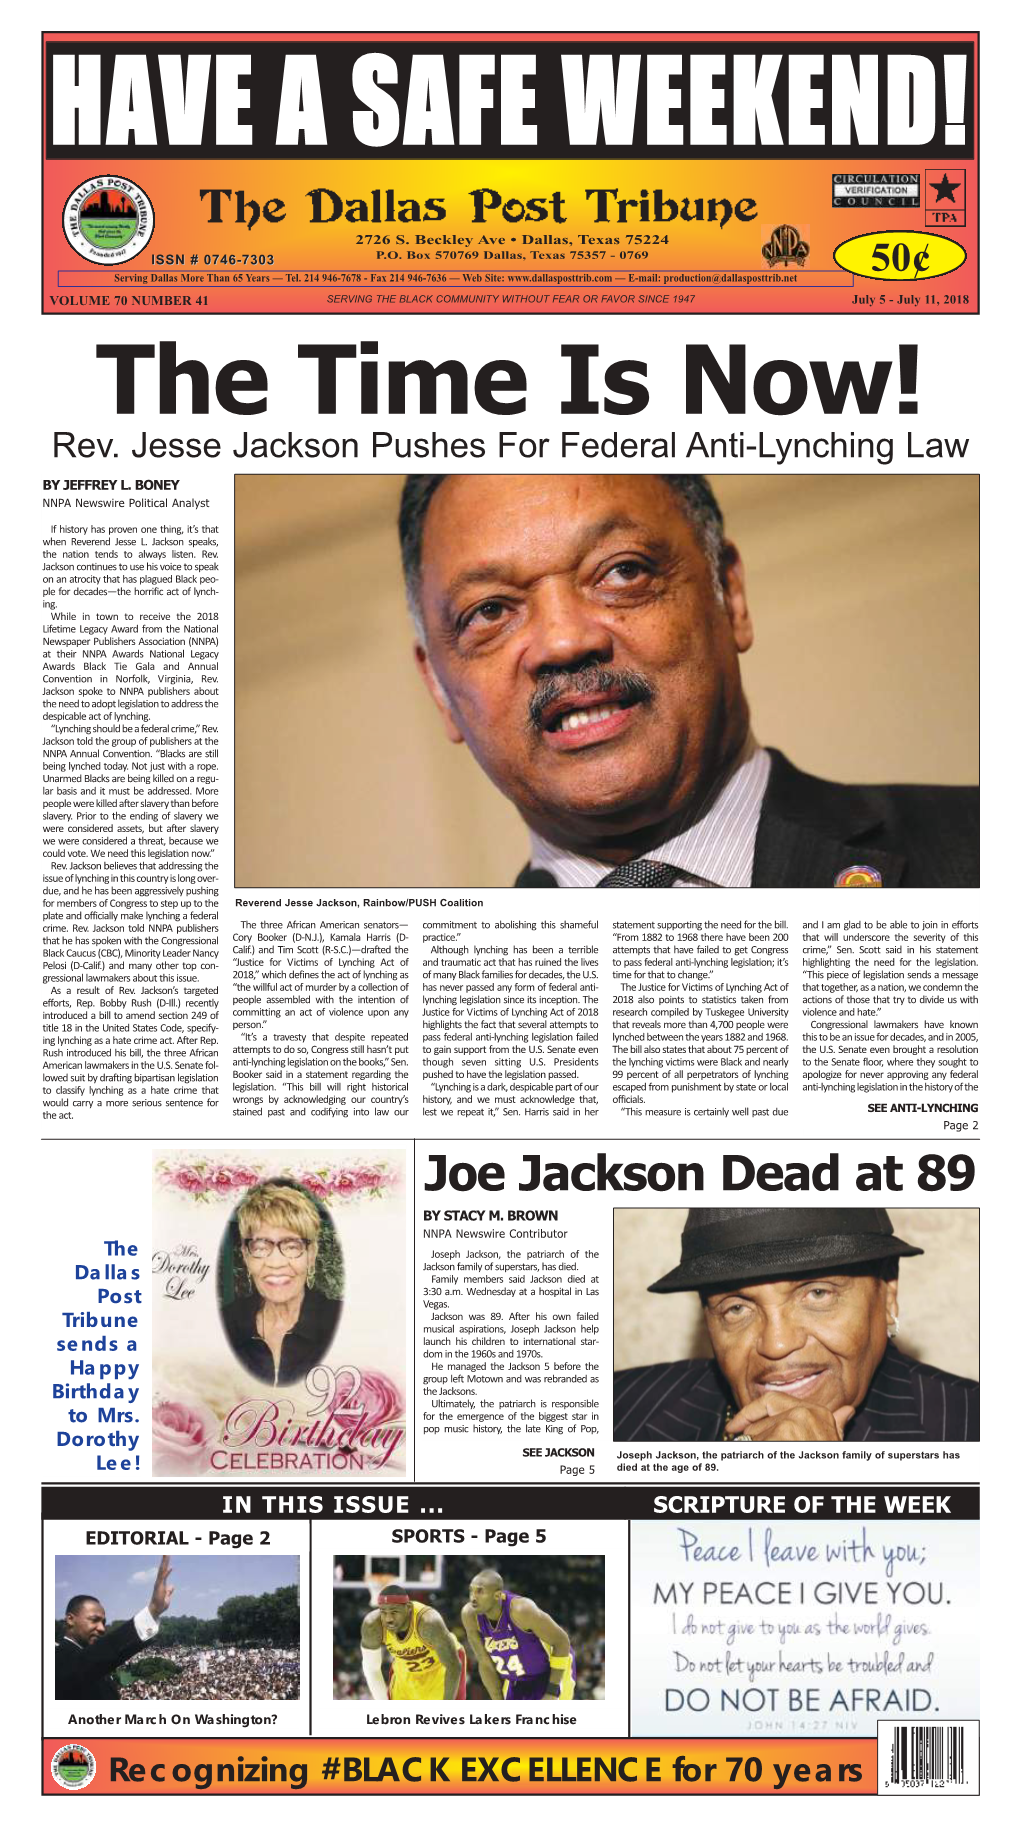 Joe Jackson Dead at 89